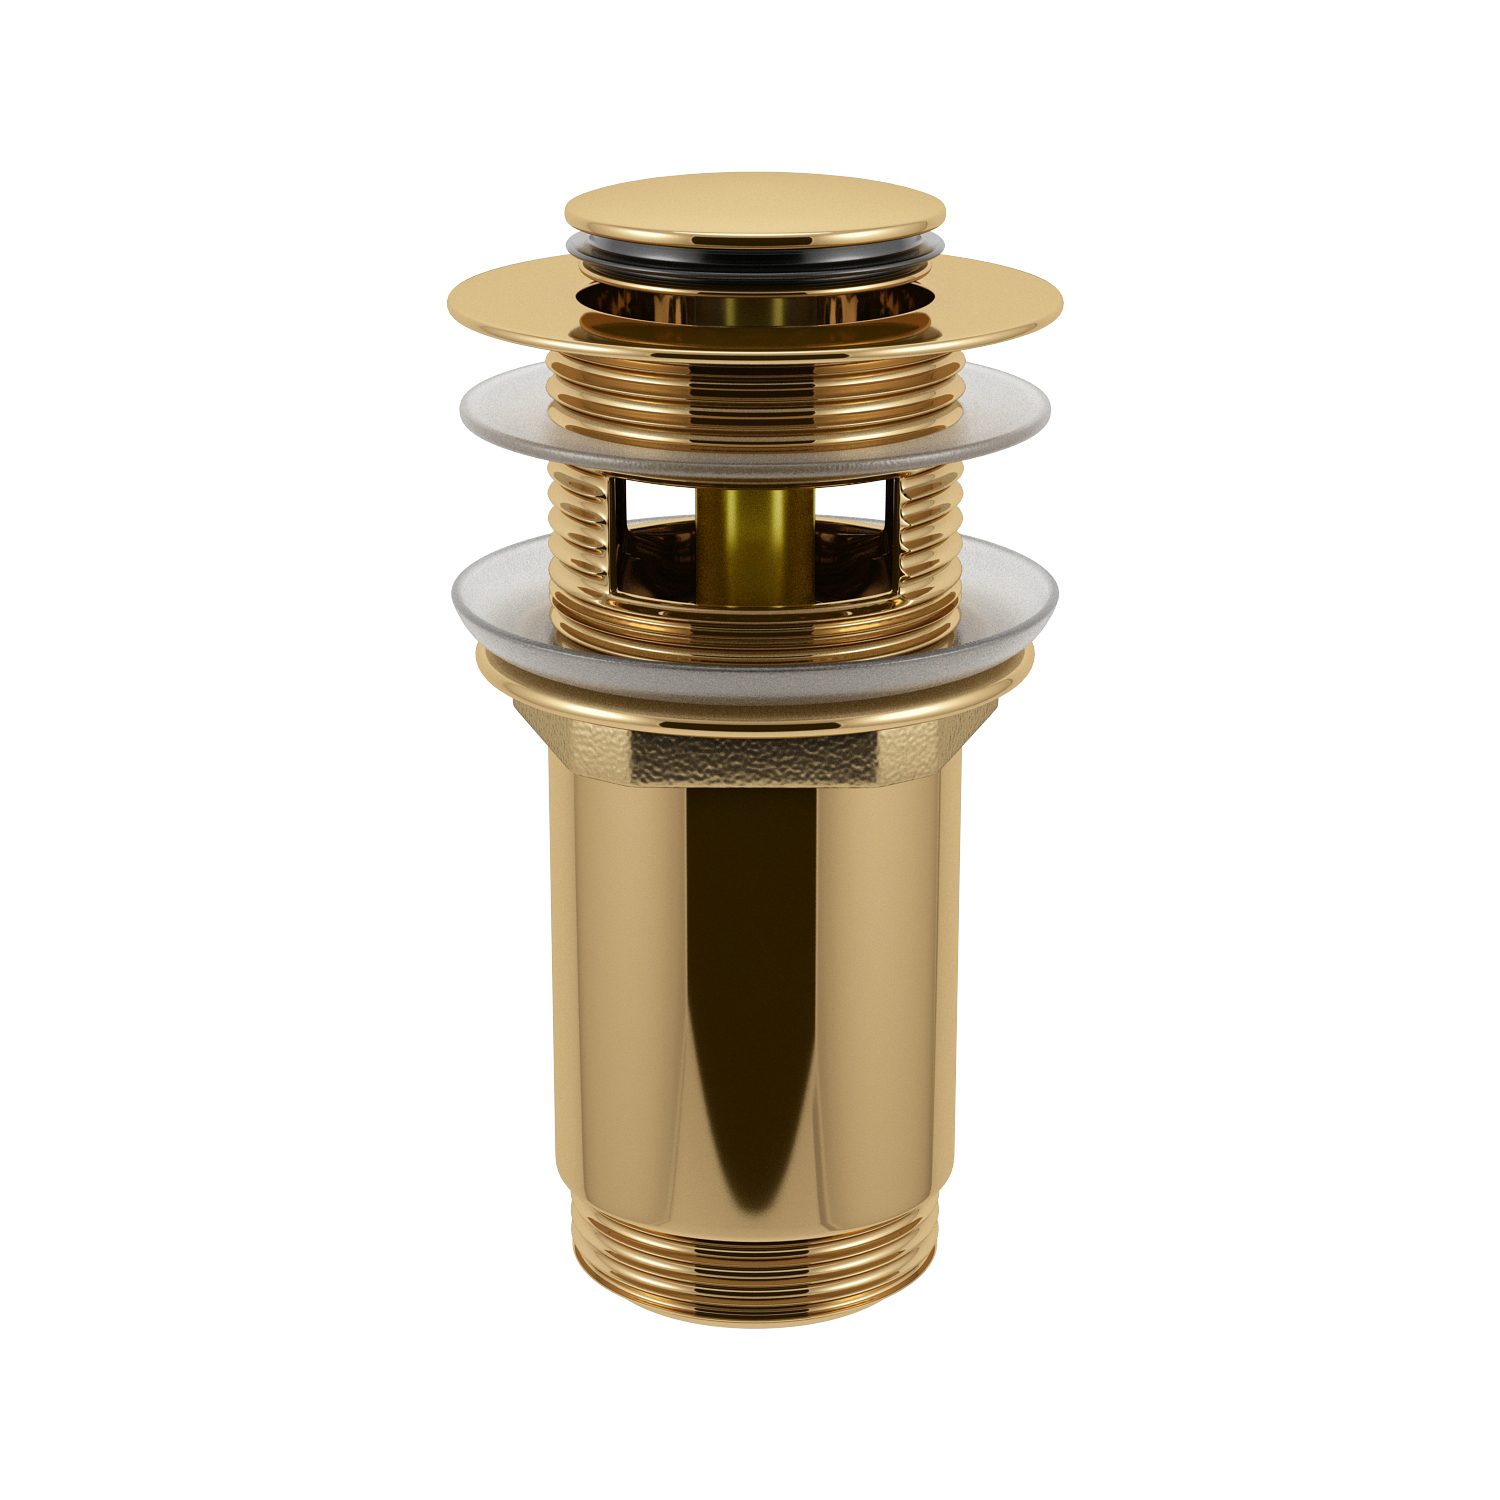 Донный клапан для раковины Wellsee Drainage System 182131000, золото, с переливом 